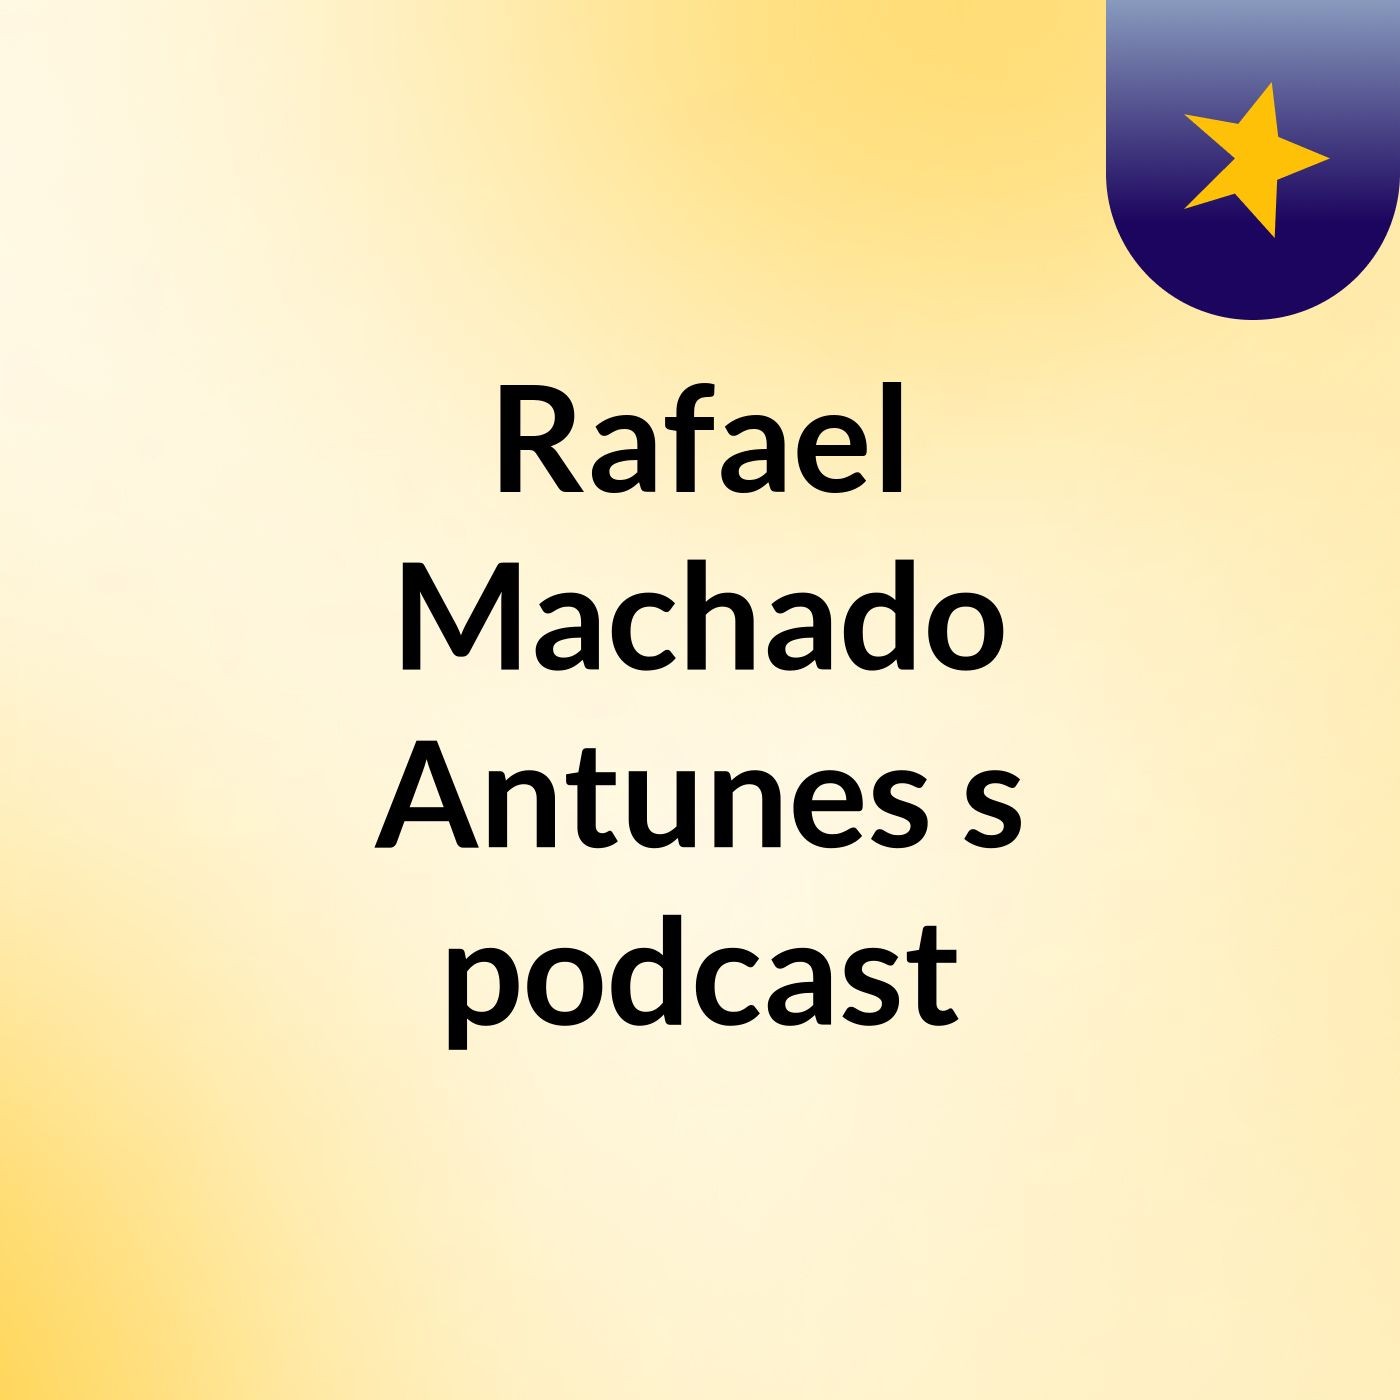 Rafael Machado Antunes's podcast